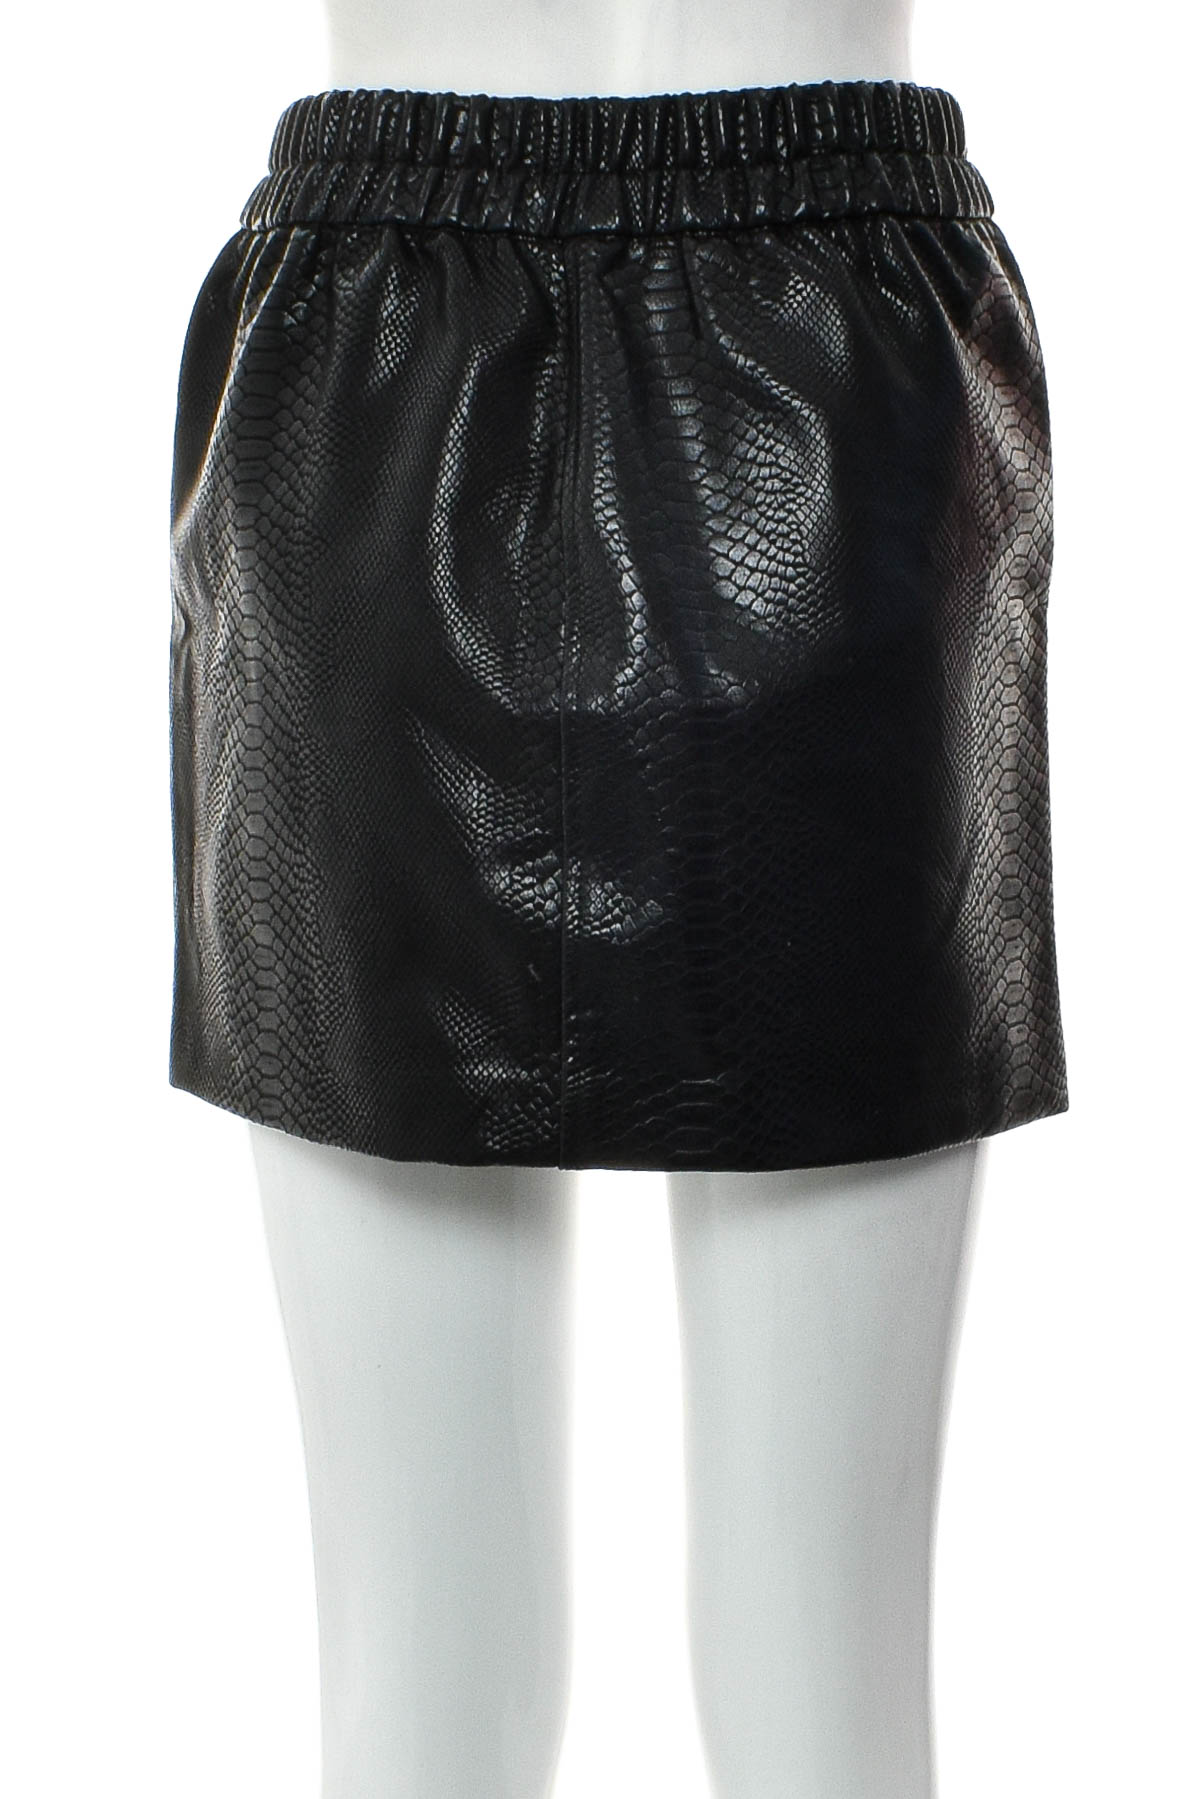 Leather skirt - Bershka - 1